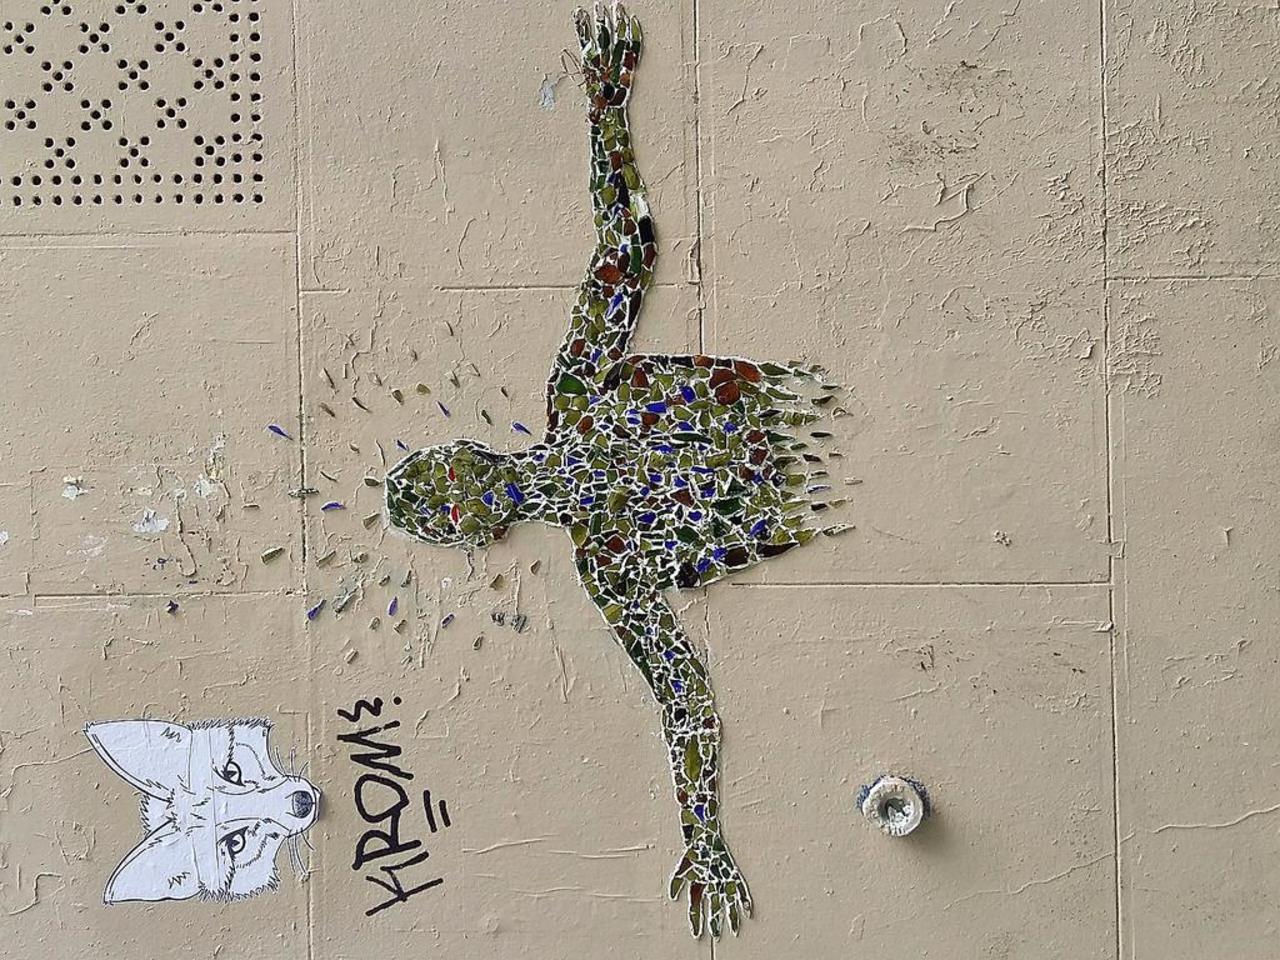 Street Art by #shatters in #Paris http://www.urbacolors.com #art #mural #graffiti #streetart http://t.co/3nkWurzrrV